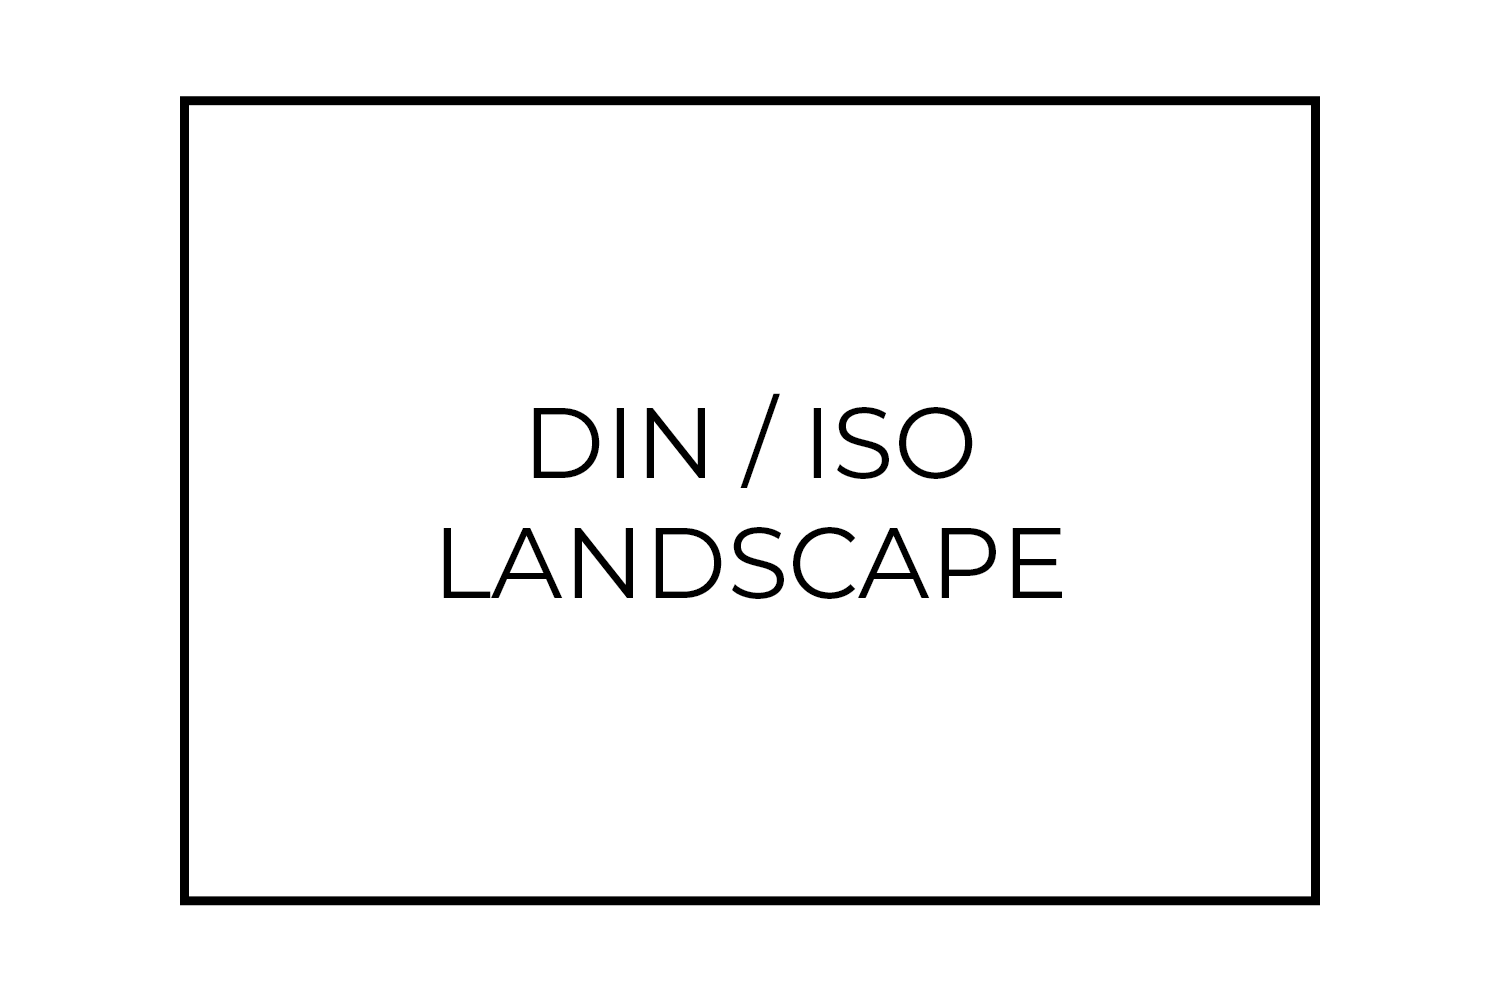 HD Metal Prints Landscape DIN / ISO